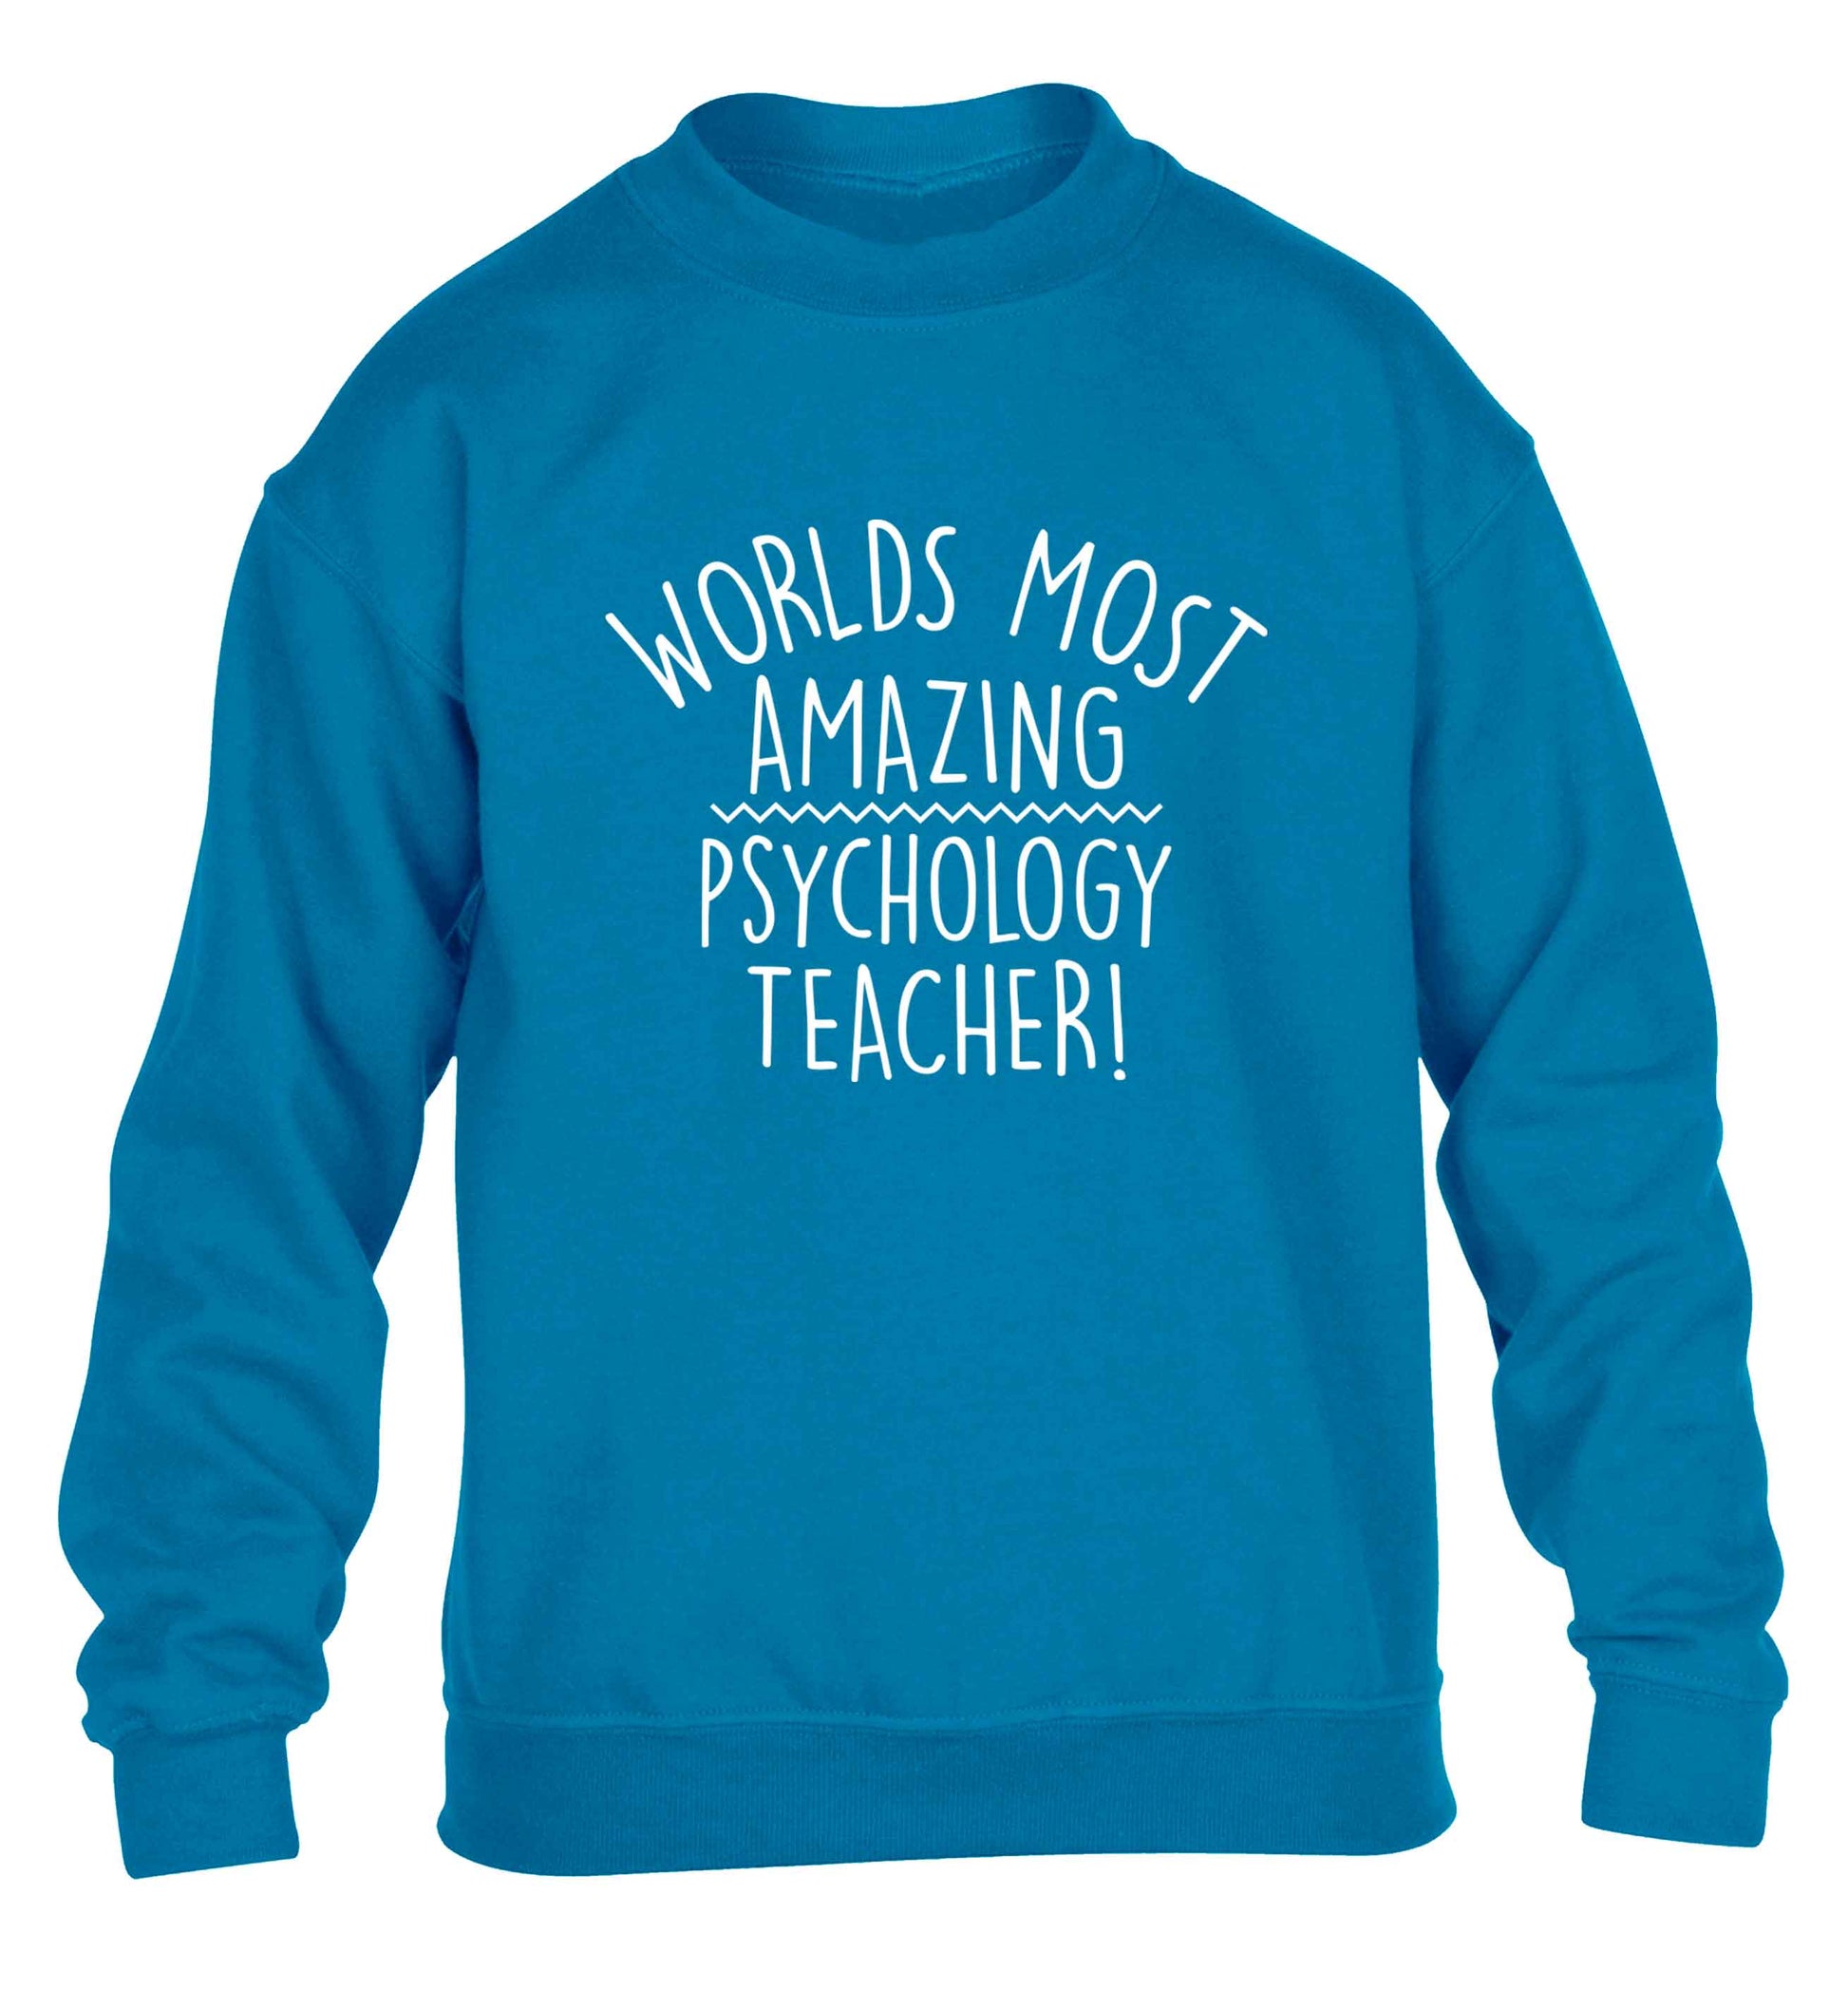 Worlds most amazing psychology teacher children's blue sweater 12-13 Years